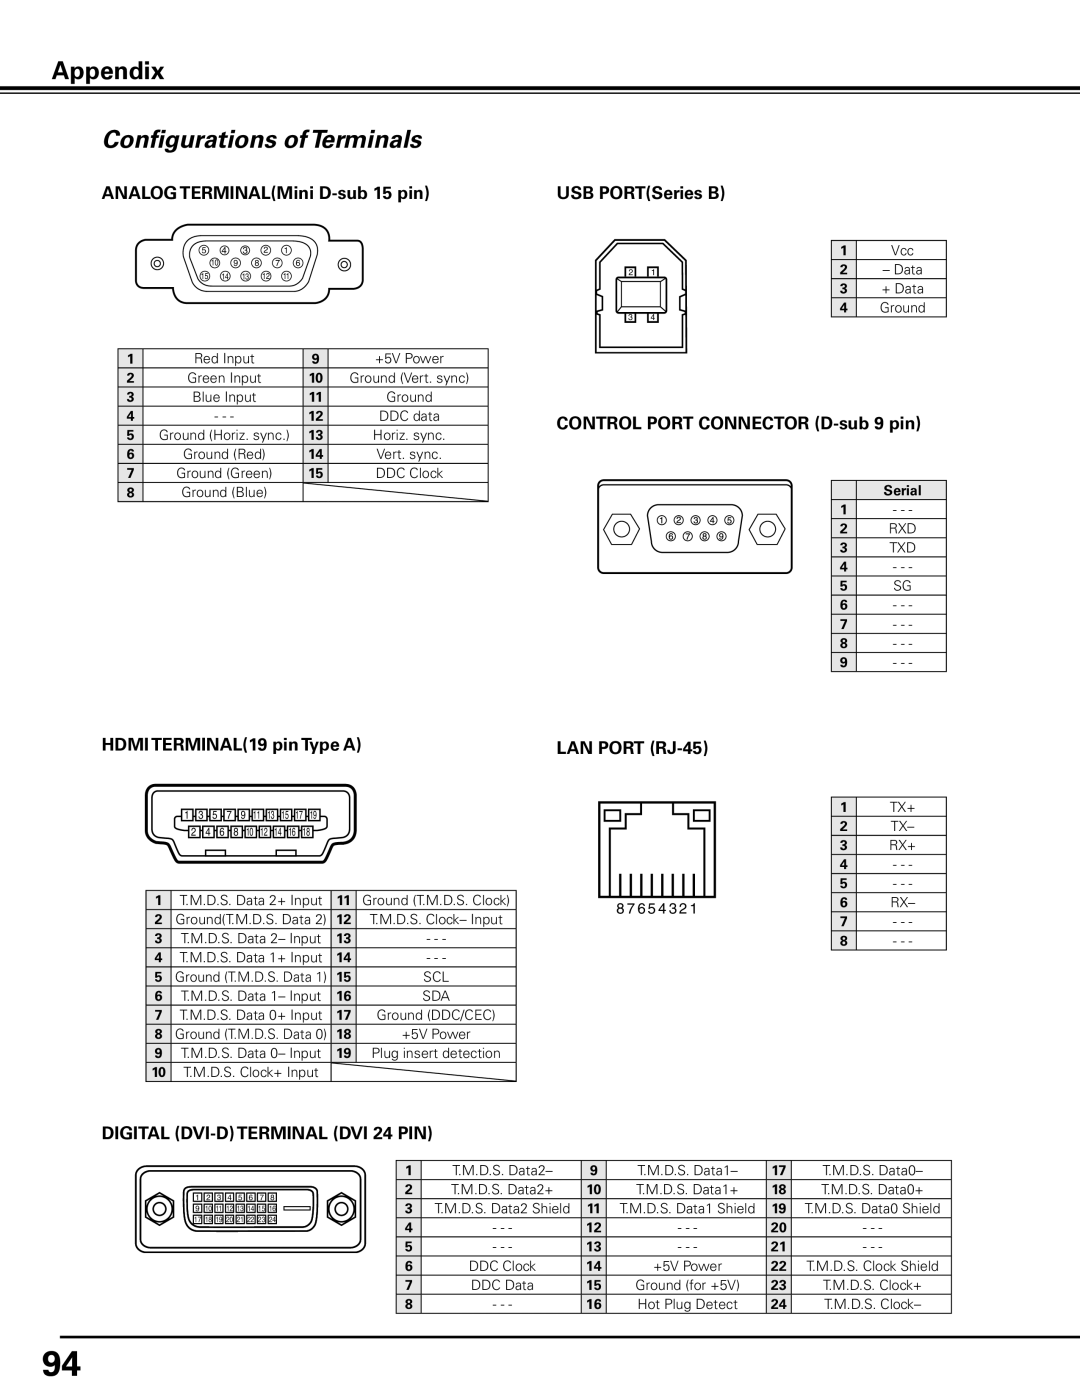 Sanyo HF15000L Configurations of Terminals, Appendix, ANALOG TERMINALMini D-sub15 pin, USB PORTSeries B, LAN PORT RJ-45 